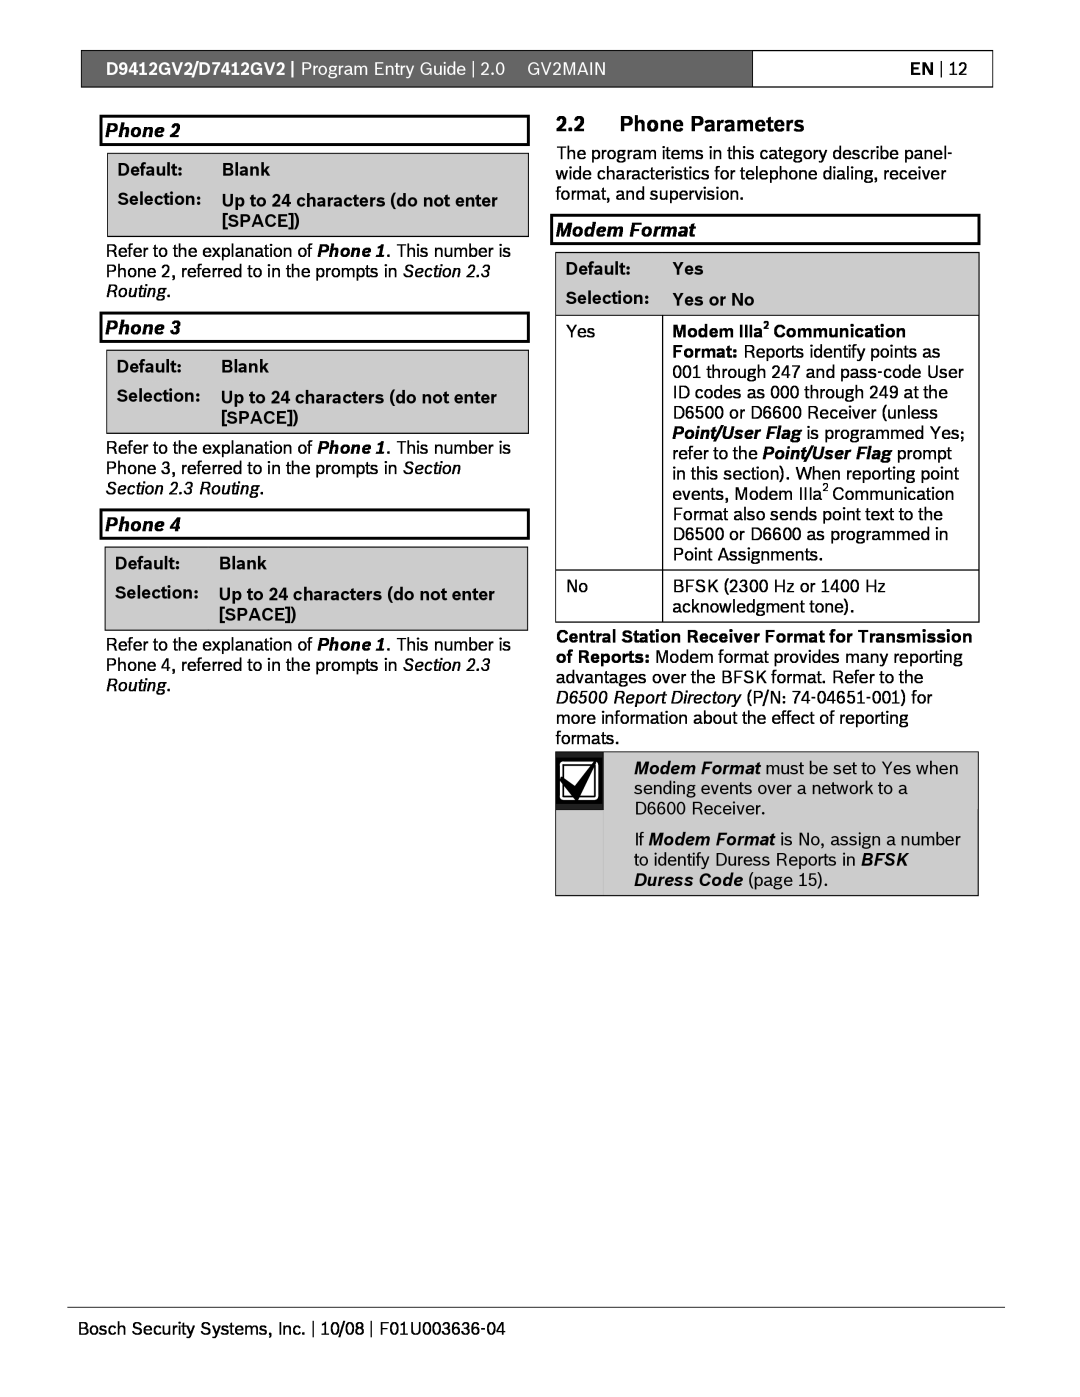 Bosch Appliances D9412GV2 manual 2.2Phone Parameters, Modem Format 